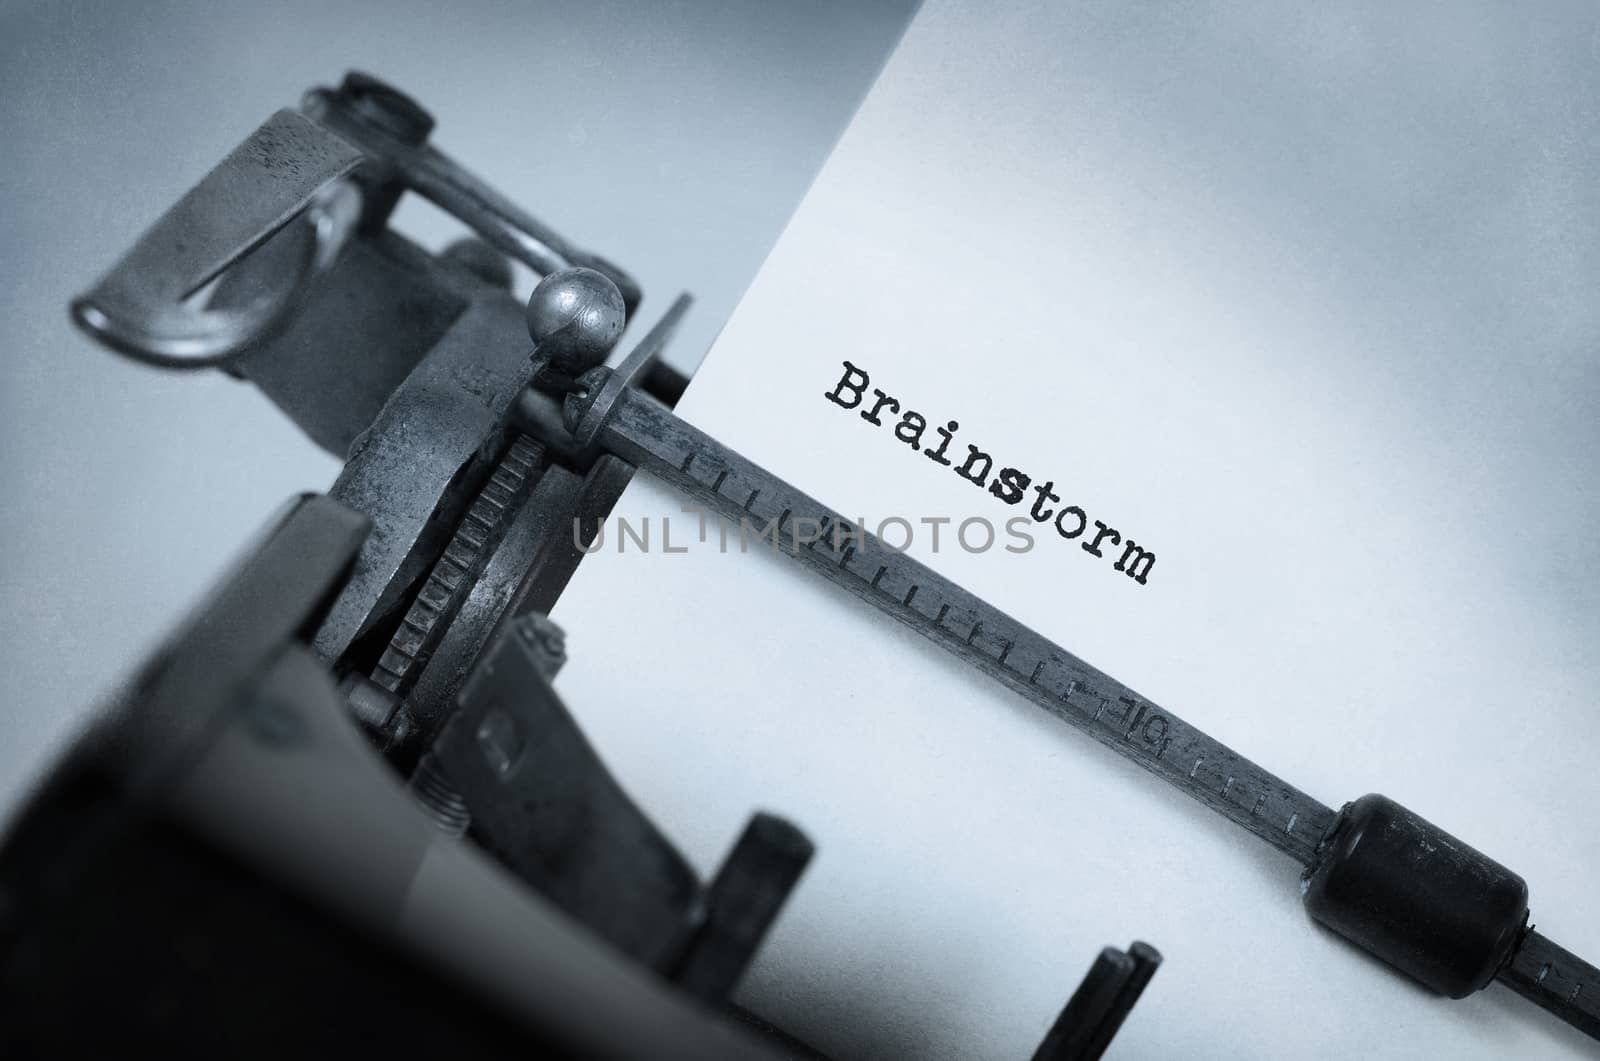 Vintage inscription made by old typewriter, brainstorm